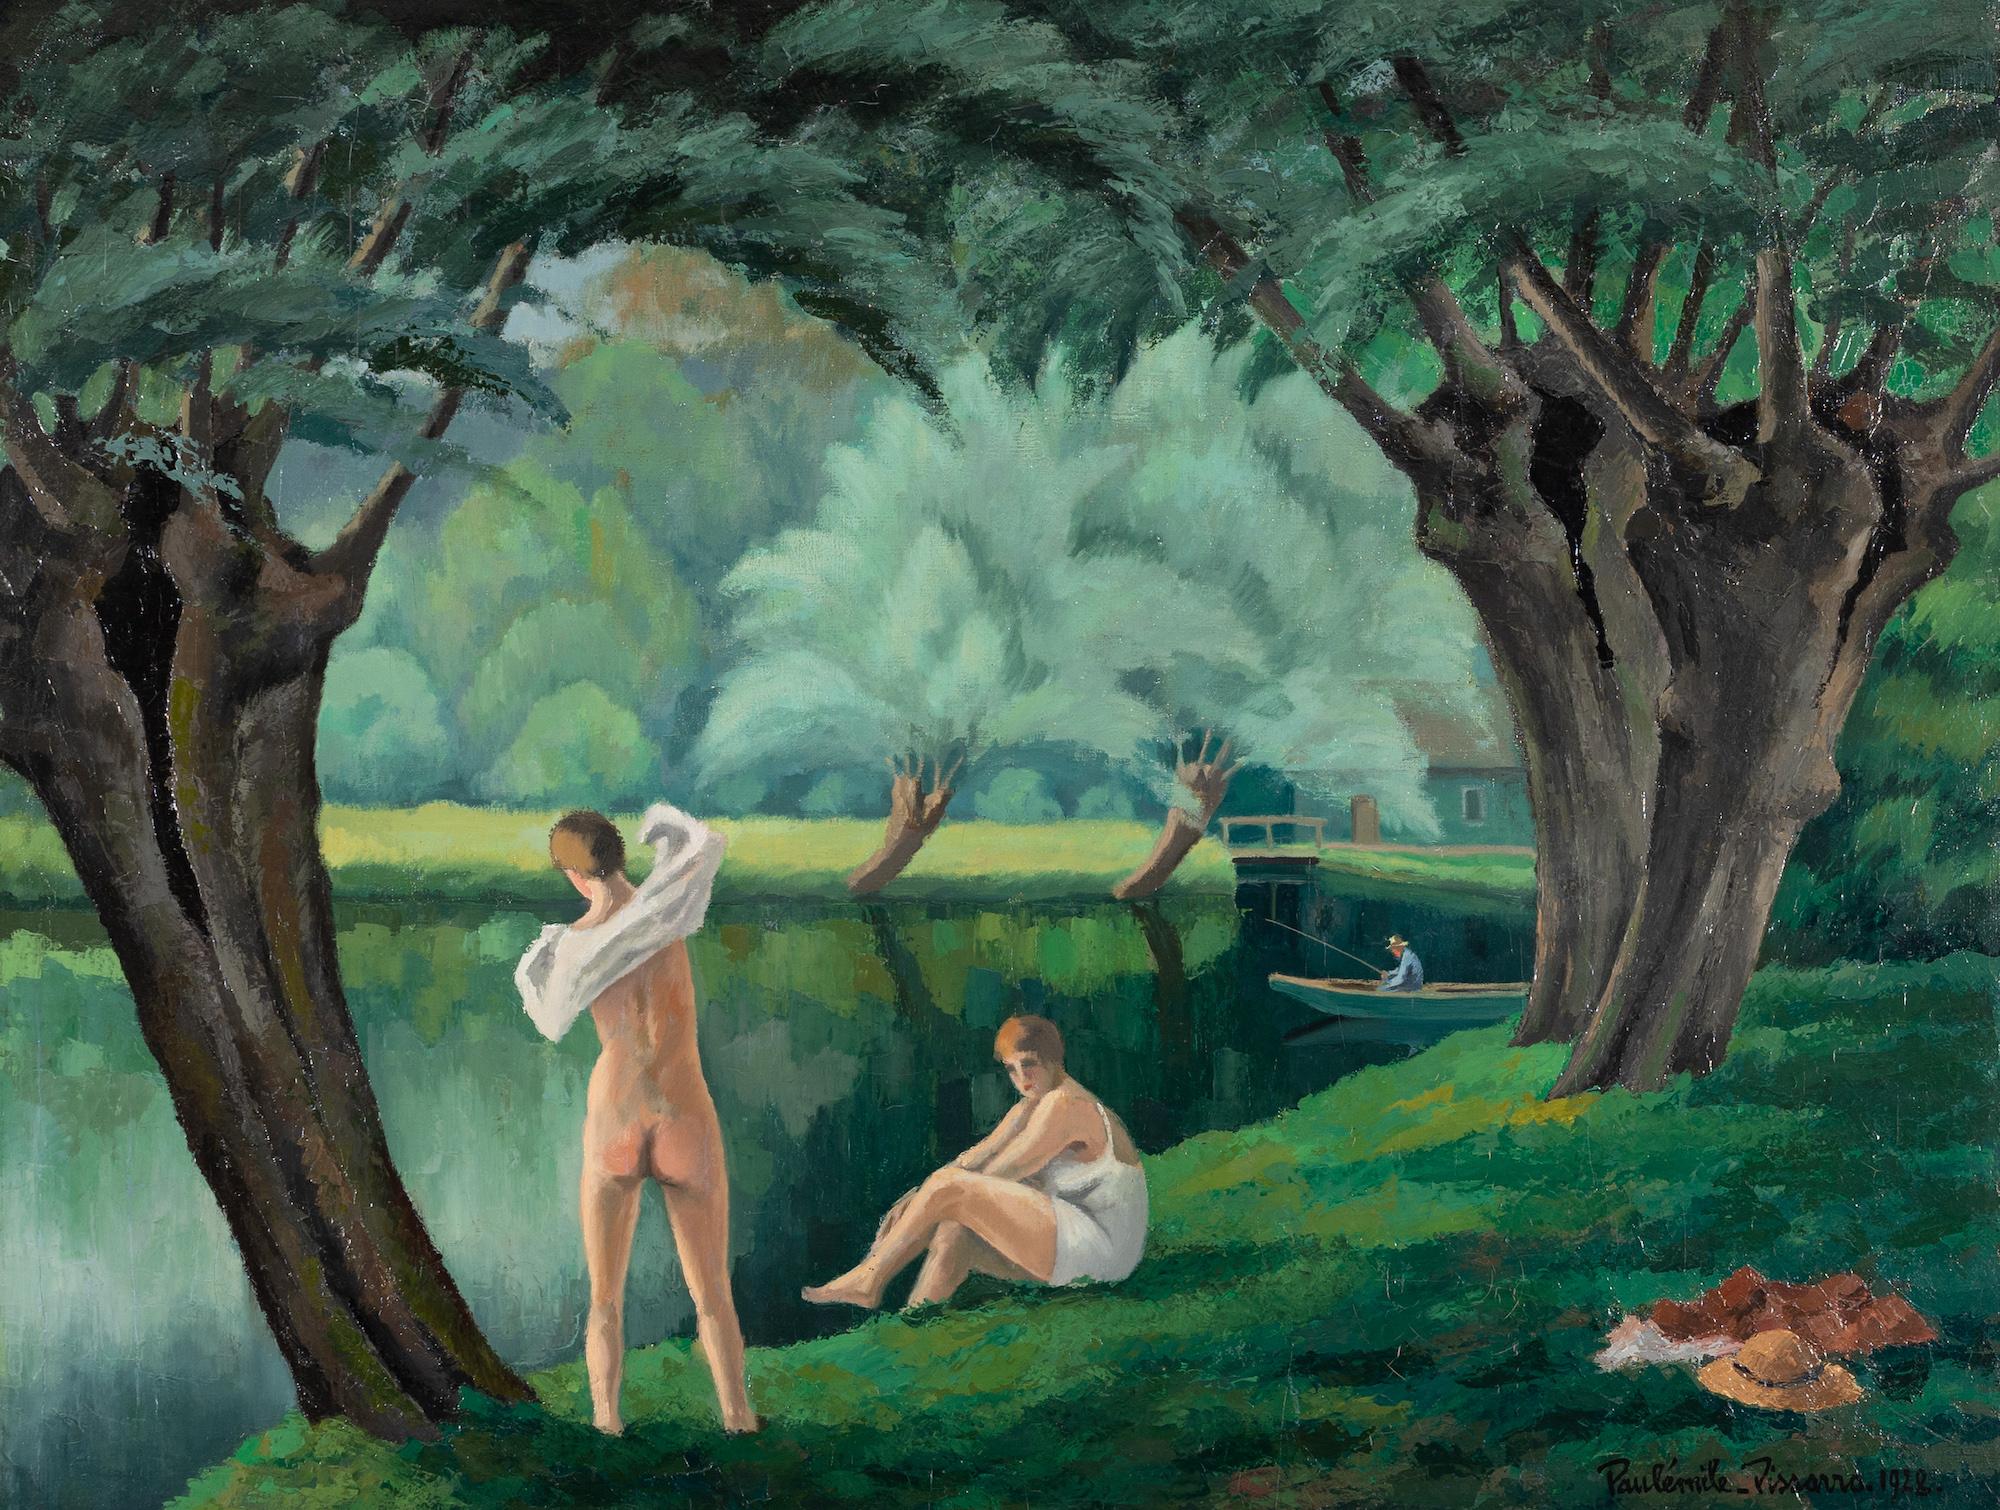 Les Baigneuses by Paulémile Pissarro - Nude scene, riverscene painting